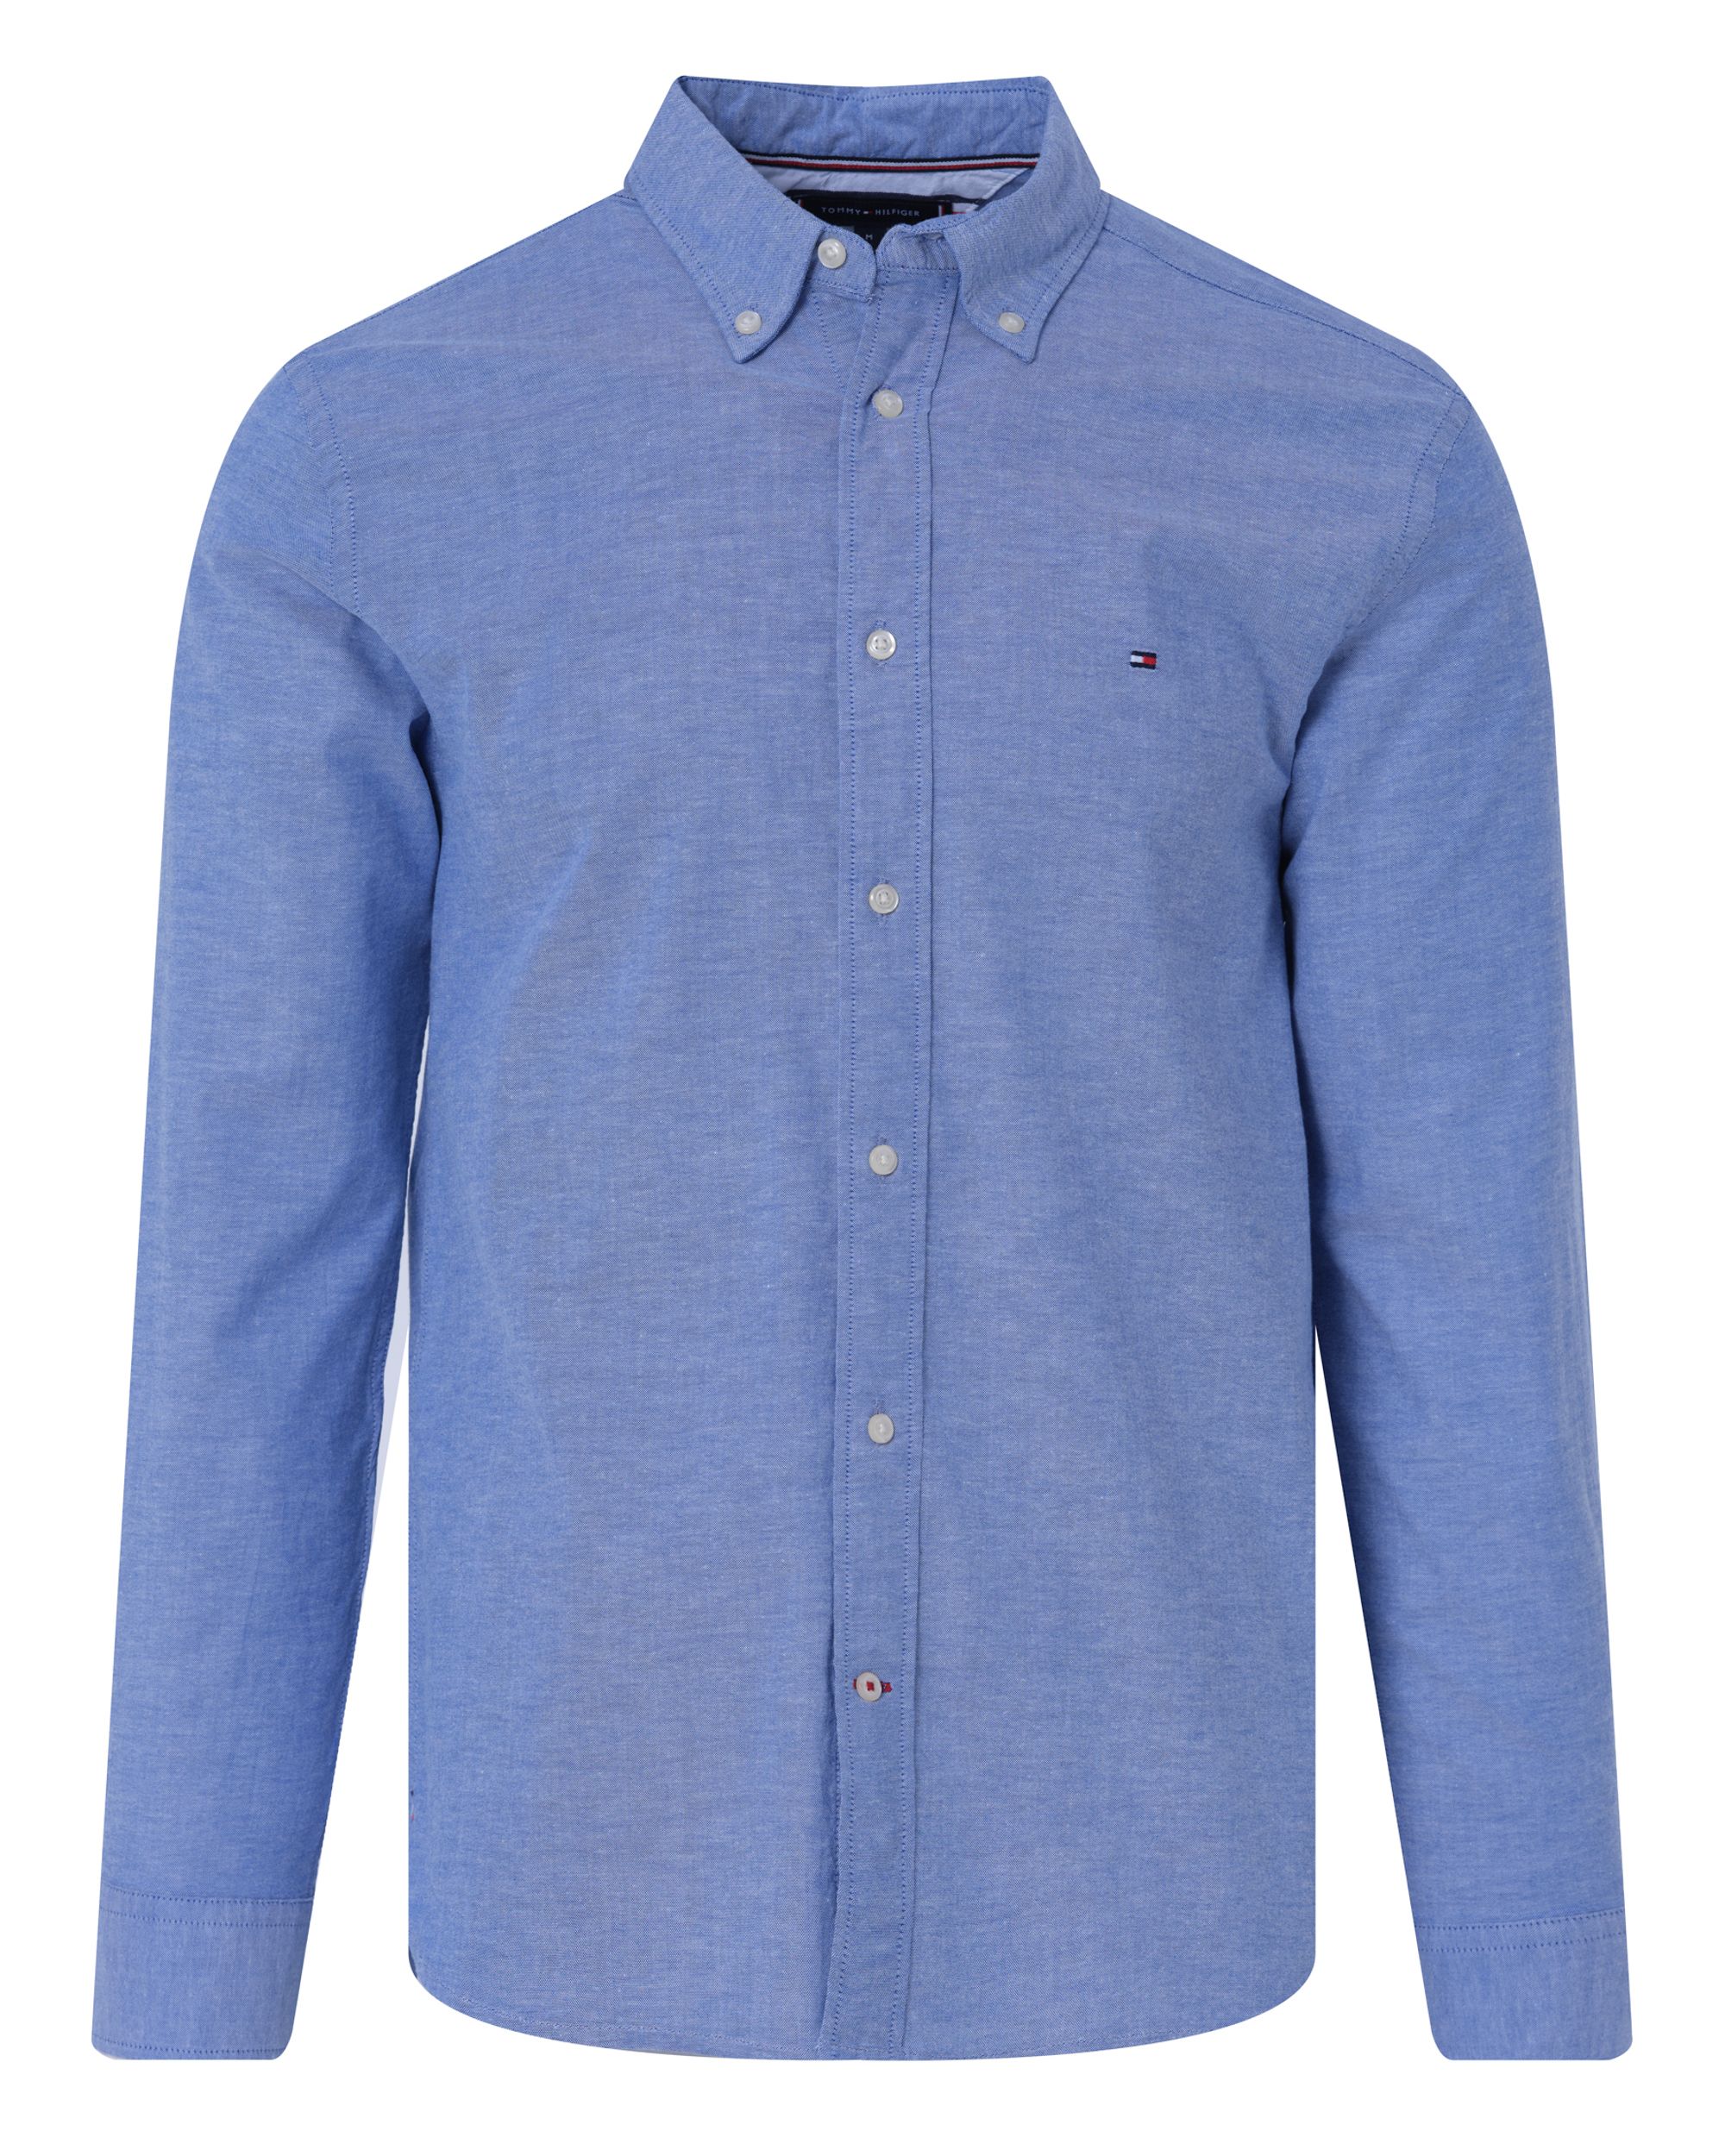 Voordracht Portiek Gooey Tommy Hilfiger Menswear Casual Overhemd LM | Shop nu - OFM.